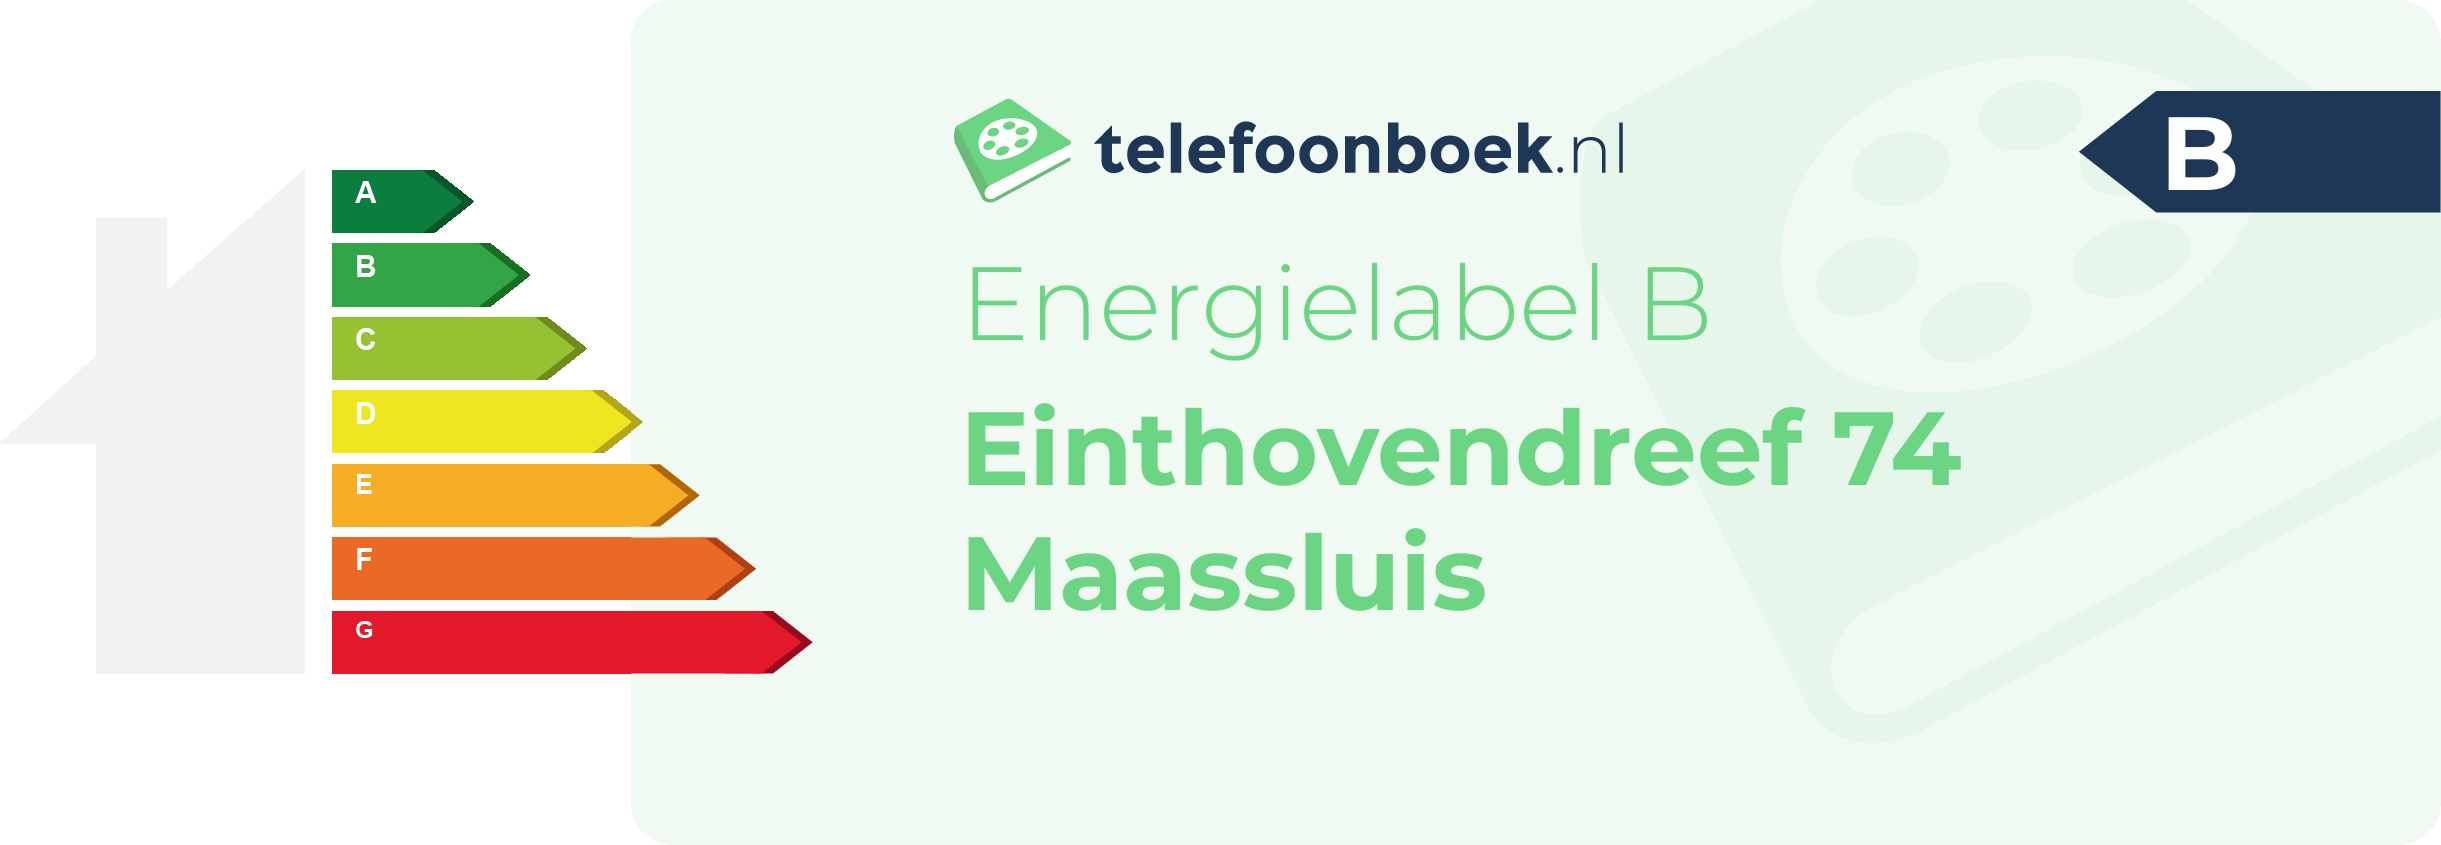 Energielabel Einthovendreef 74 Maassluis